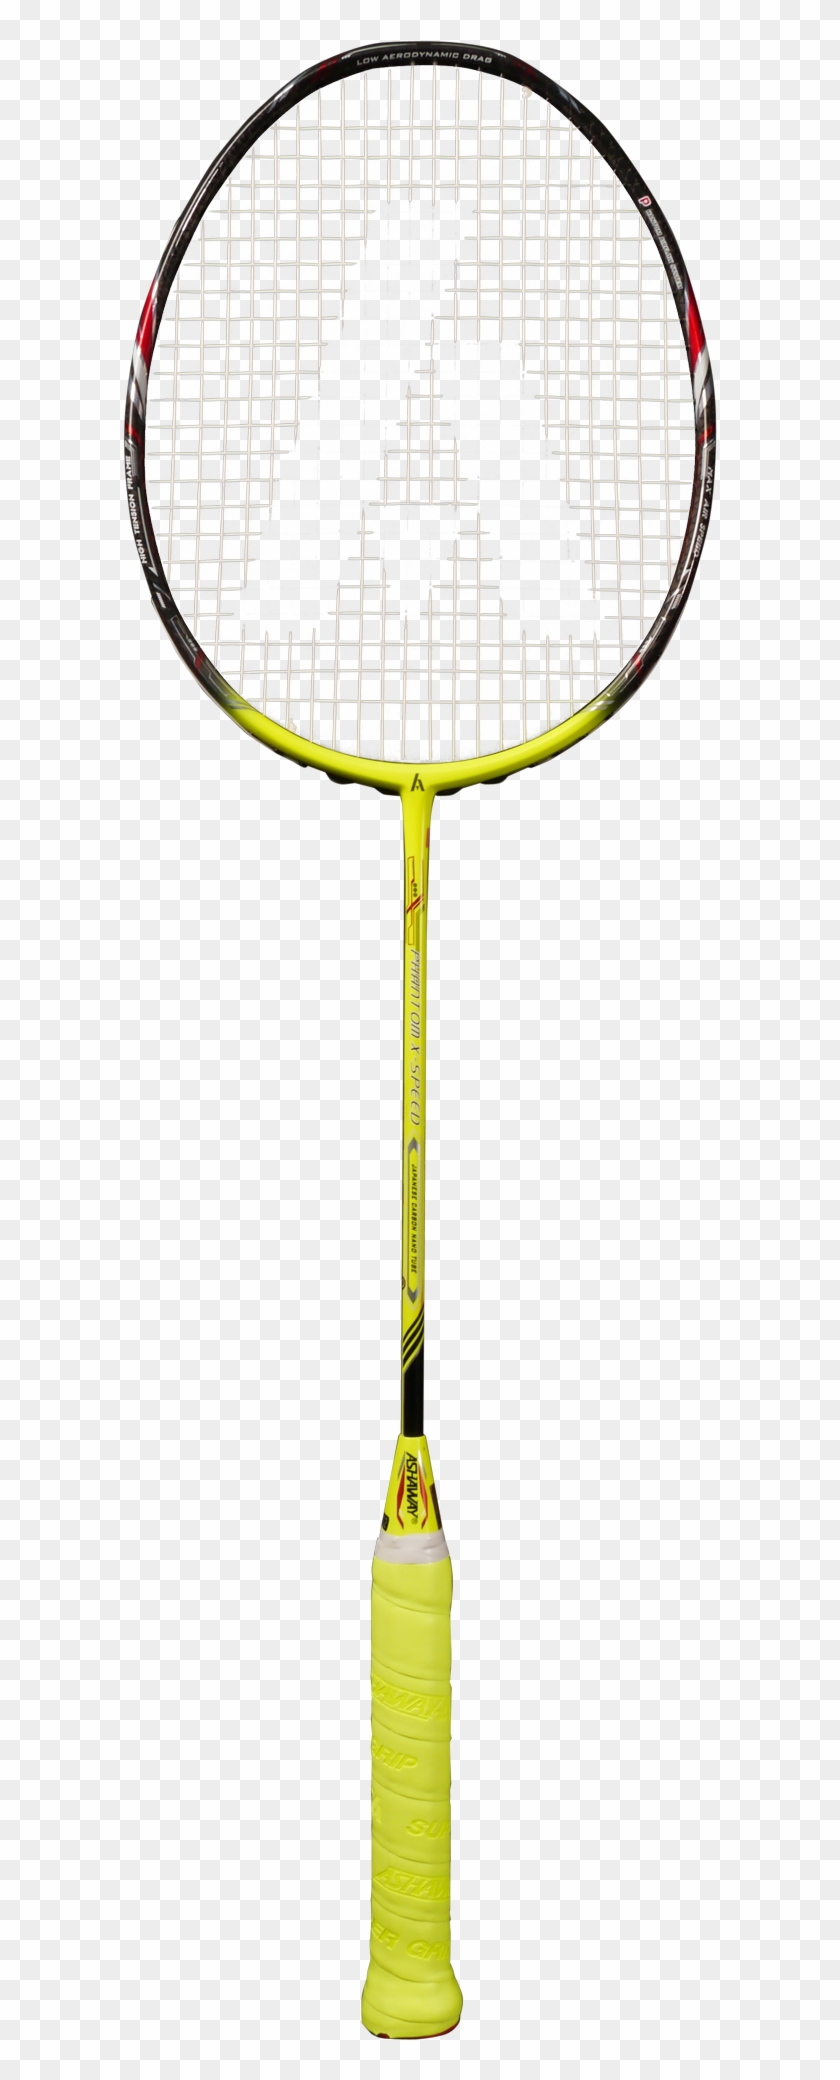 Badminton Racket Png Image - Badminton Racket Transparent Png #206210